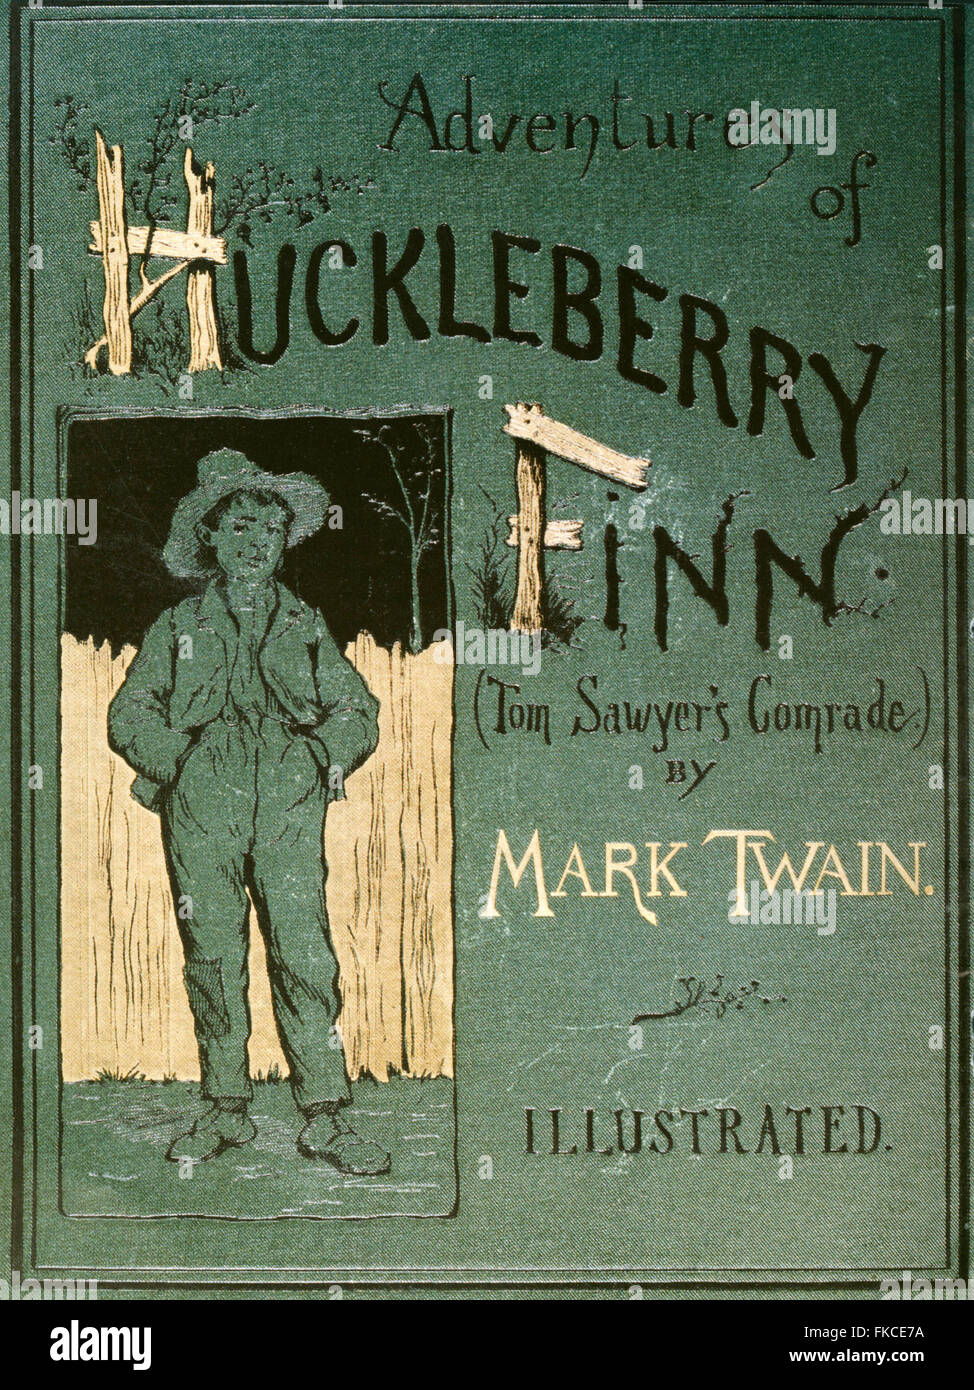 Image result for huckleberry finn book cover original